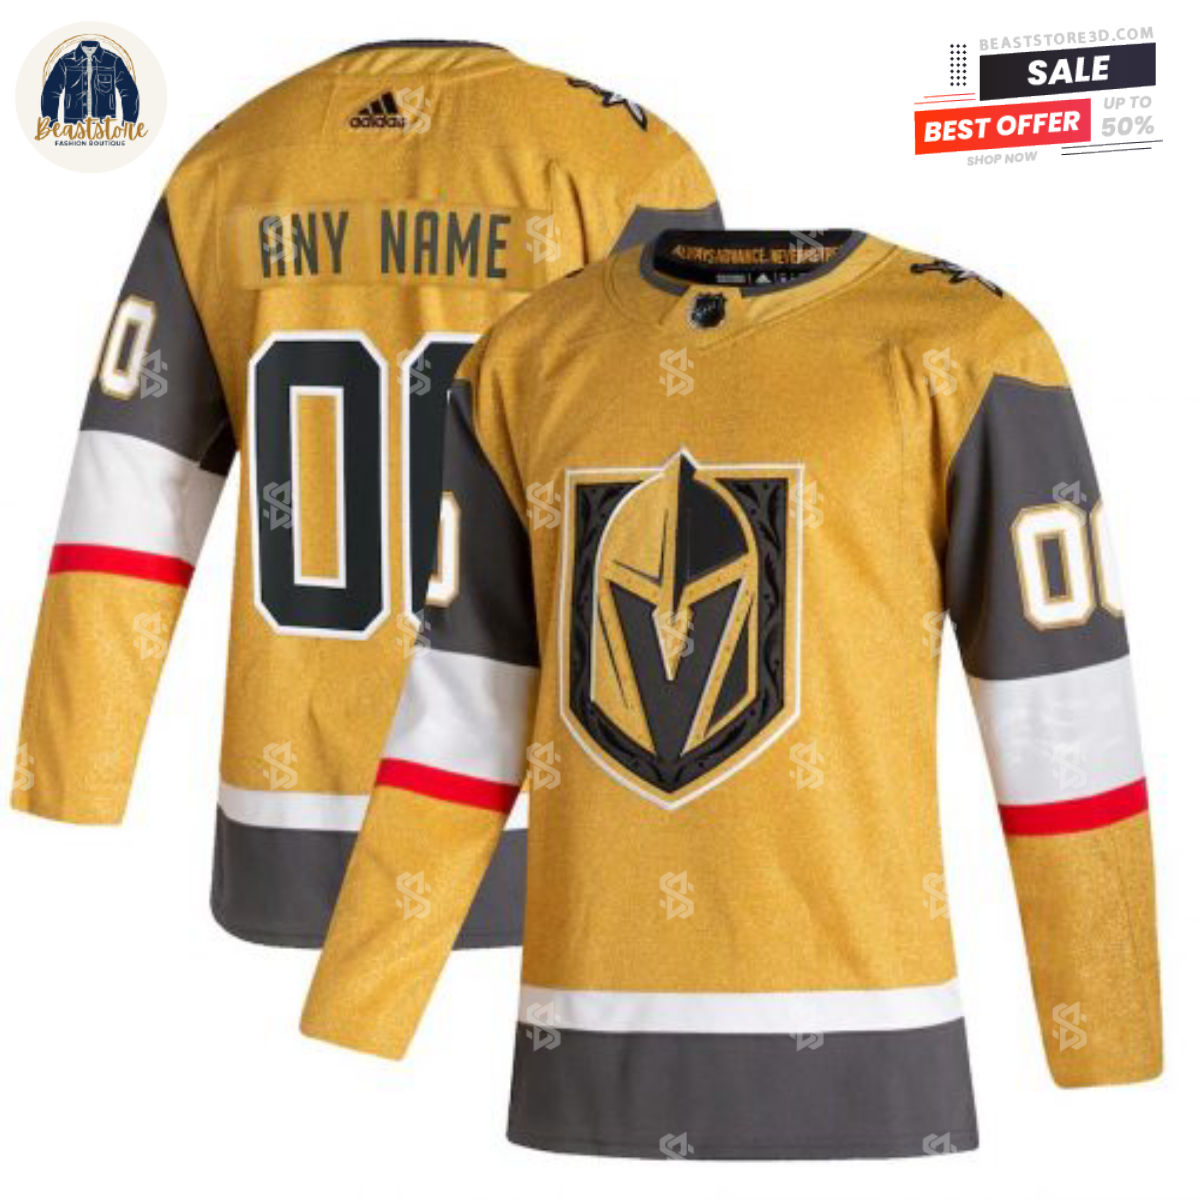 Vegas Golden Knights Gold Alternate Personalized NHL Hockey Jerseys